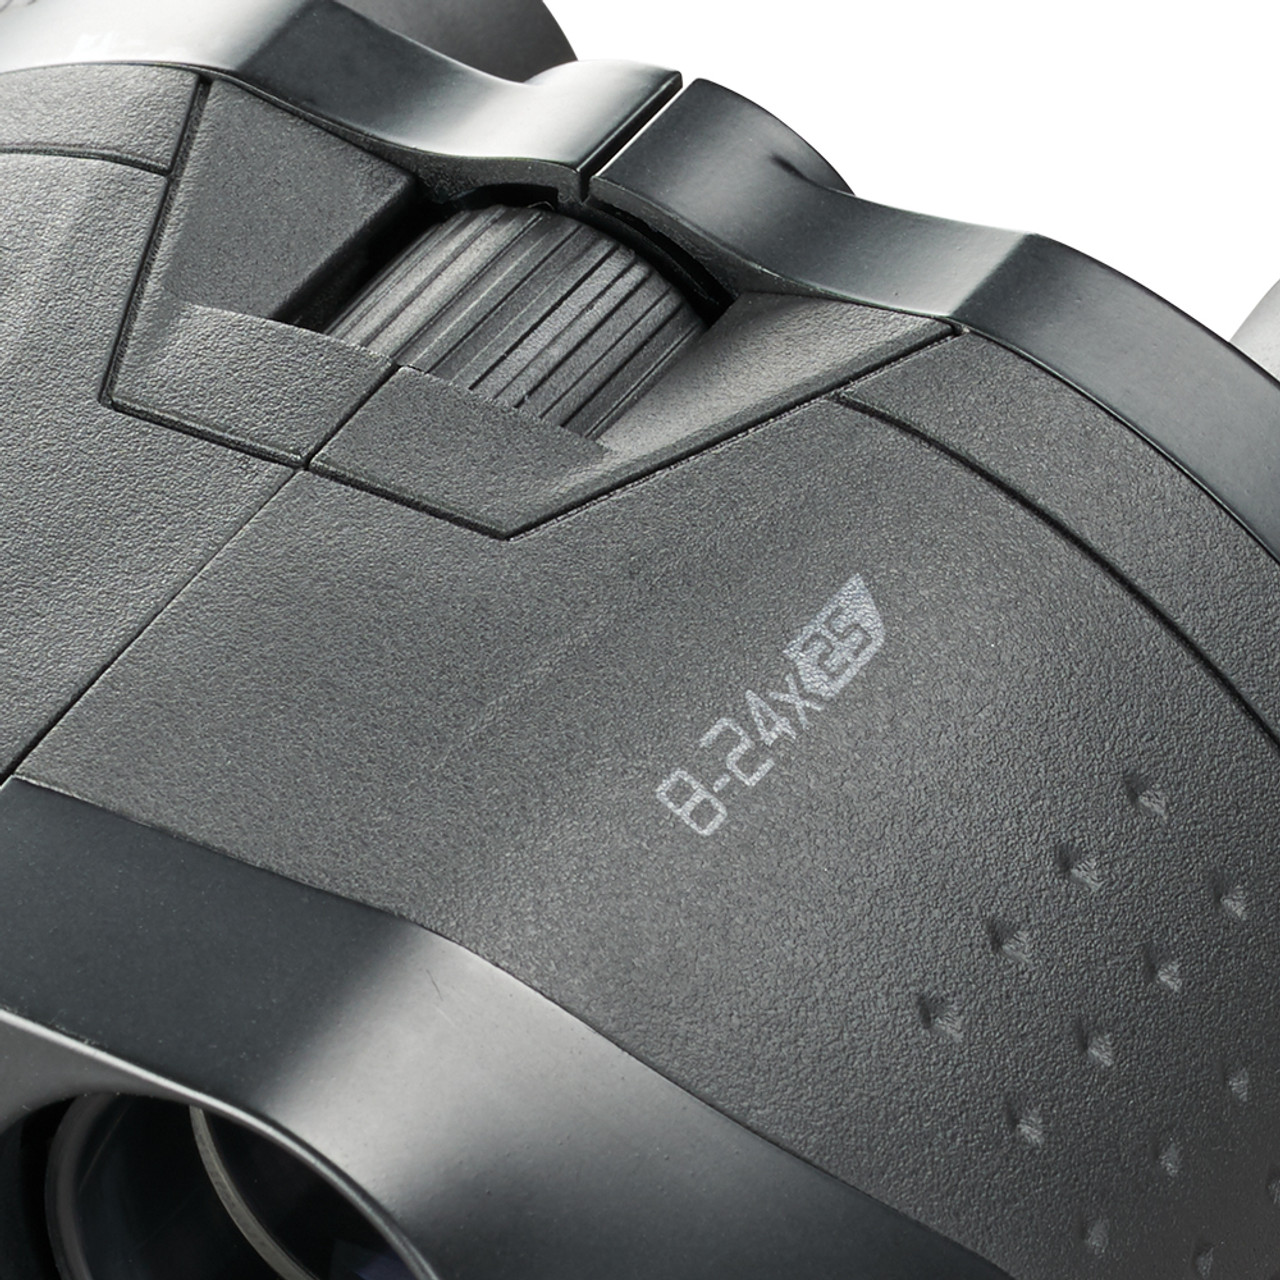 Essentials 8–24X25mm Binocular